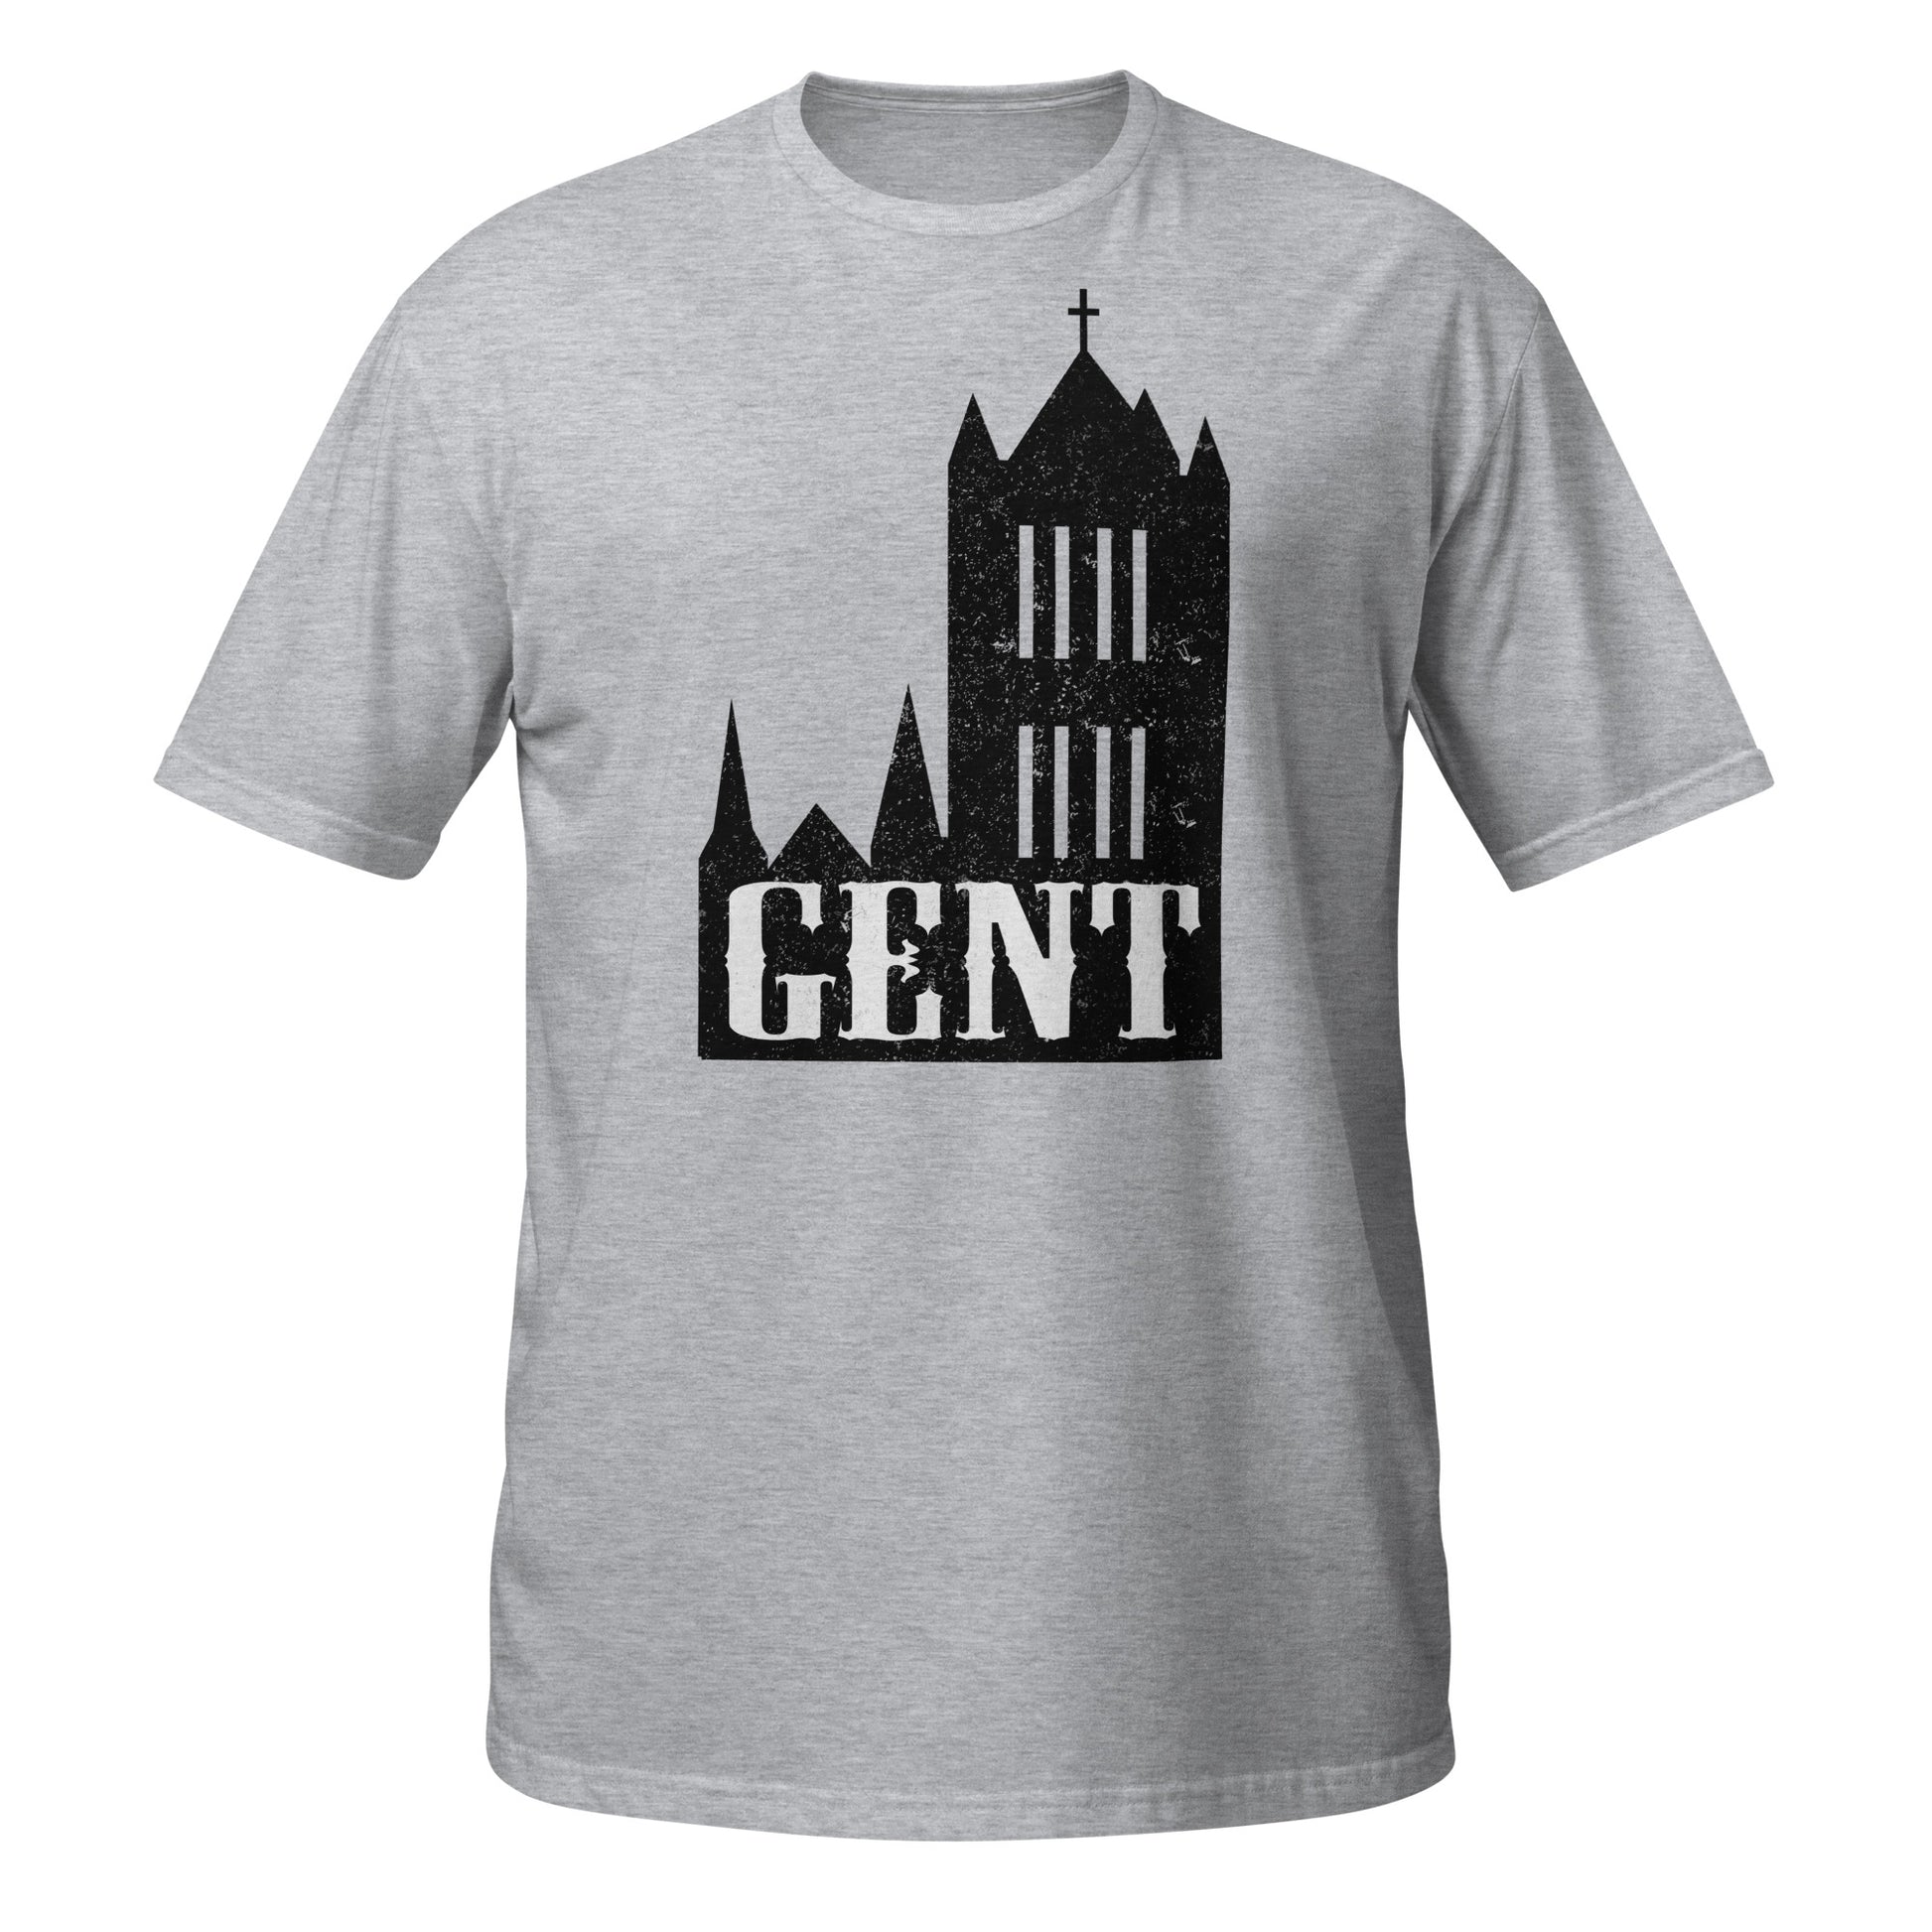 Unique Ghent T-Shirt Printed With Gravensteen Castle Ghent